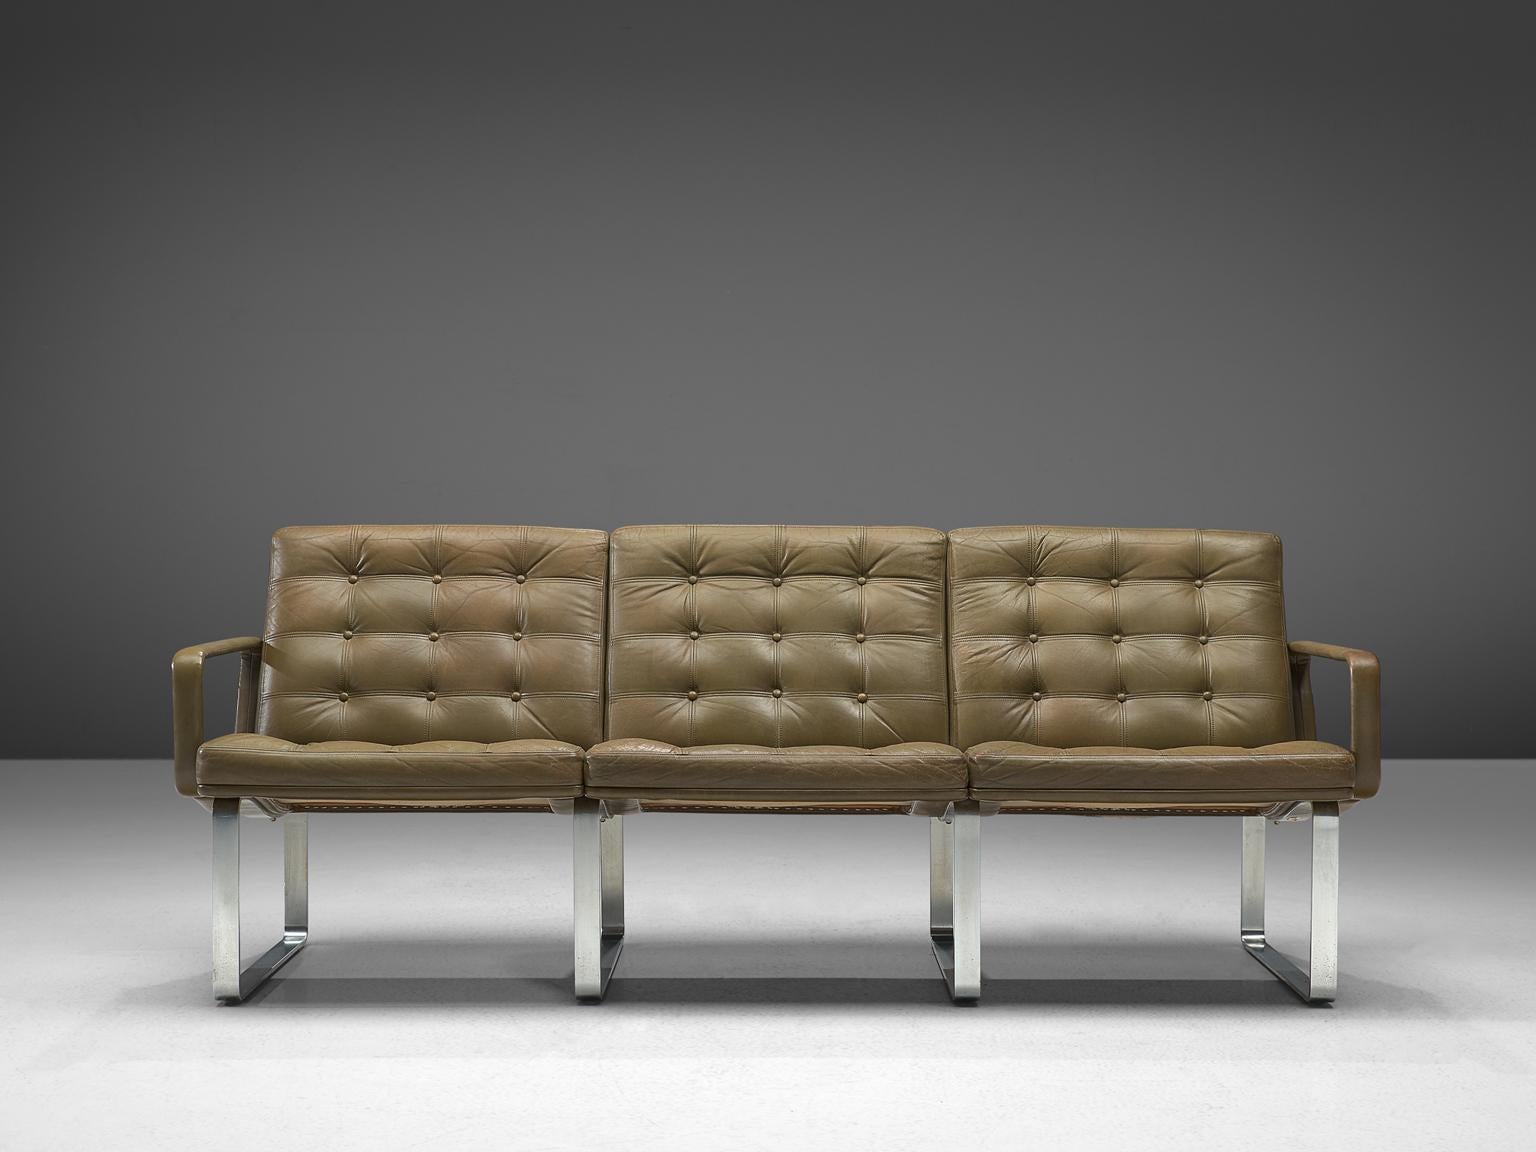 Ole Gjerløv-Knudsen & Torben Lind for France & Søn, three-seat sofa, teak and leather, Denmark, 1962 

Modern and beautiful colored modular sofa, designed by Ole Gjerløv-Knudsen & Torben Lind as part of the Moduline series in 1961. The steel frame